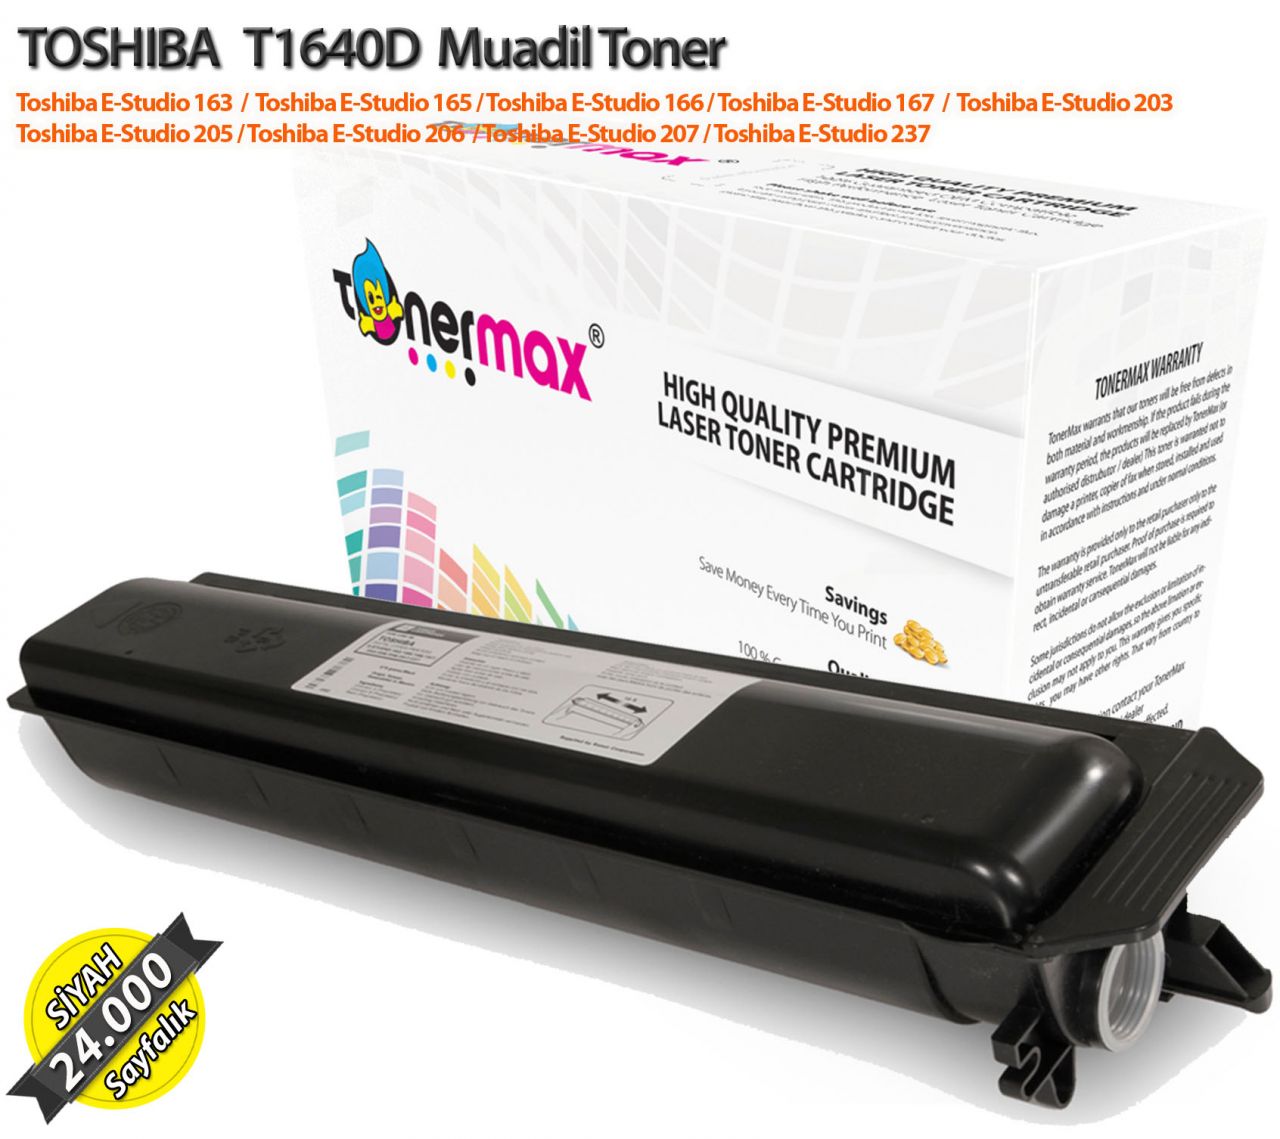 Toshiba T1640D Muadil Toner/ Estudio 163/ 165/ 166/ 167/ 203/ 205/ 207/ 237 